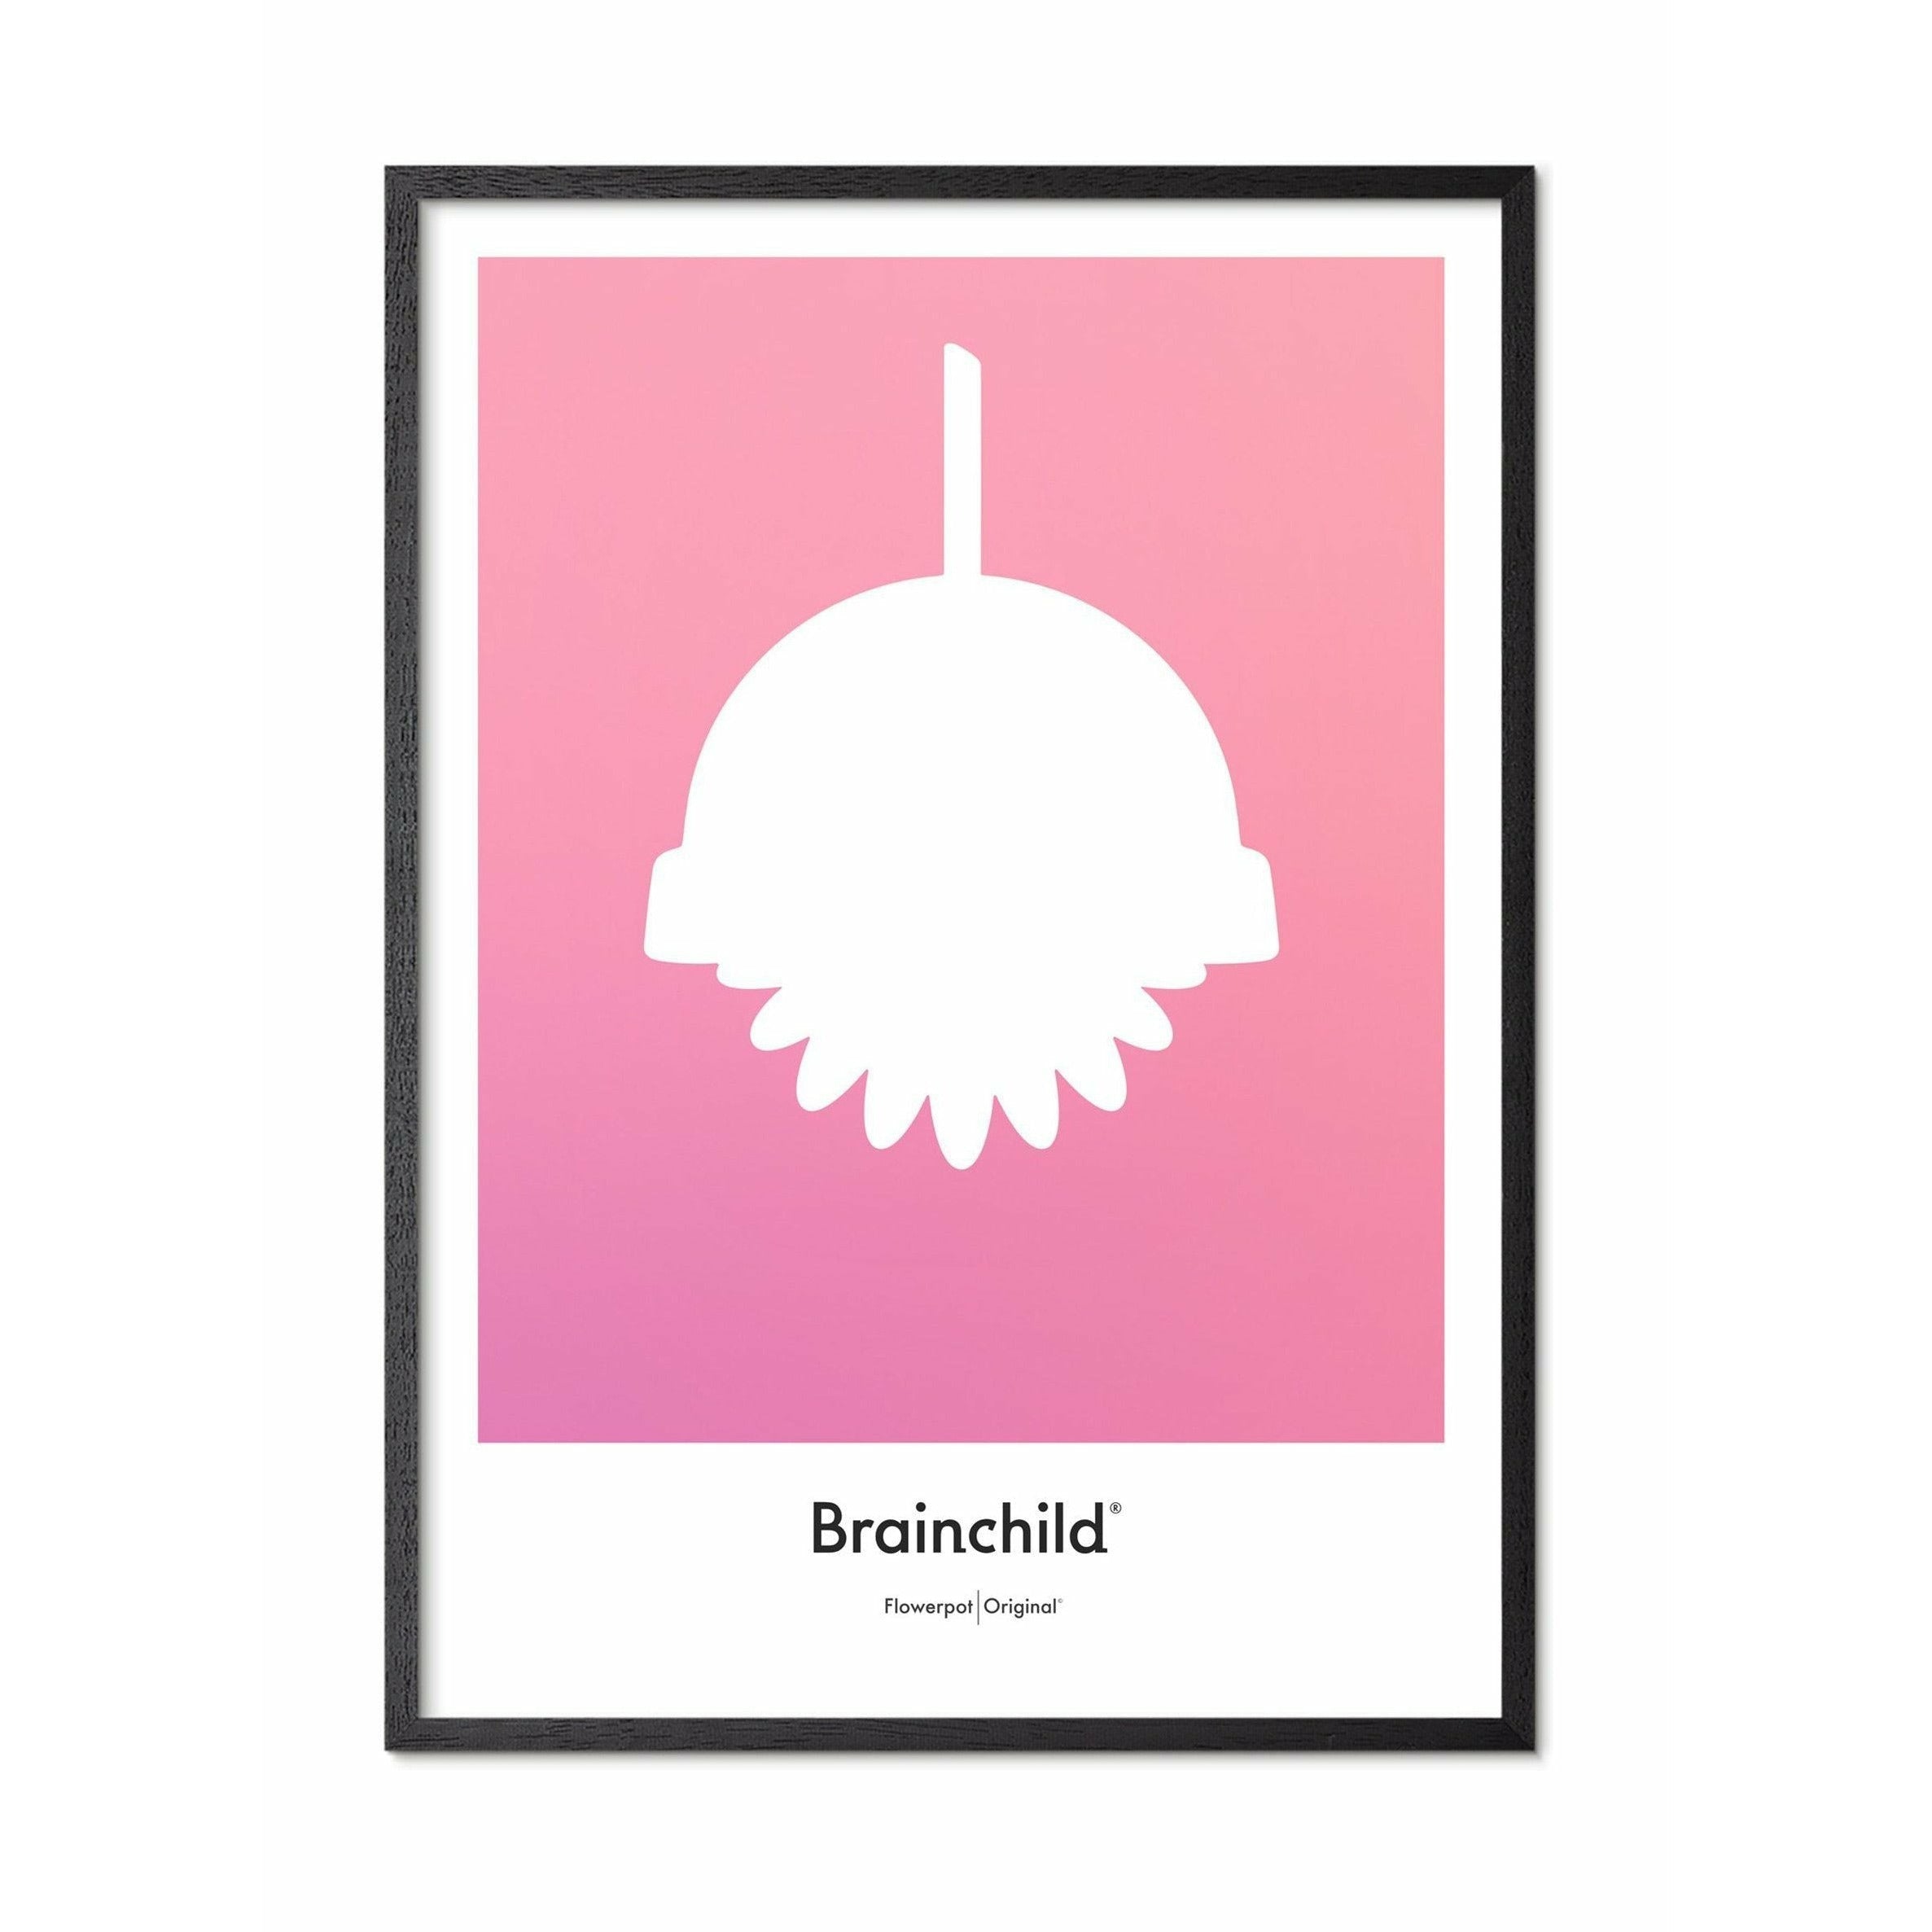 Brainchild Flowerpot Design Icon Poster, Frame In Black Lacquered Wood 70x100 Cm, Pink